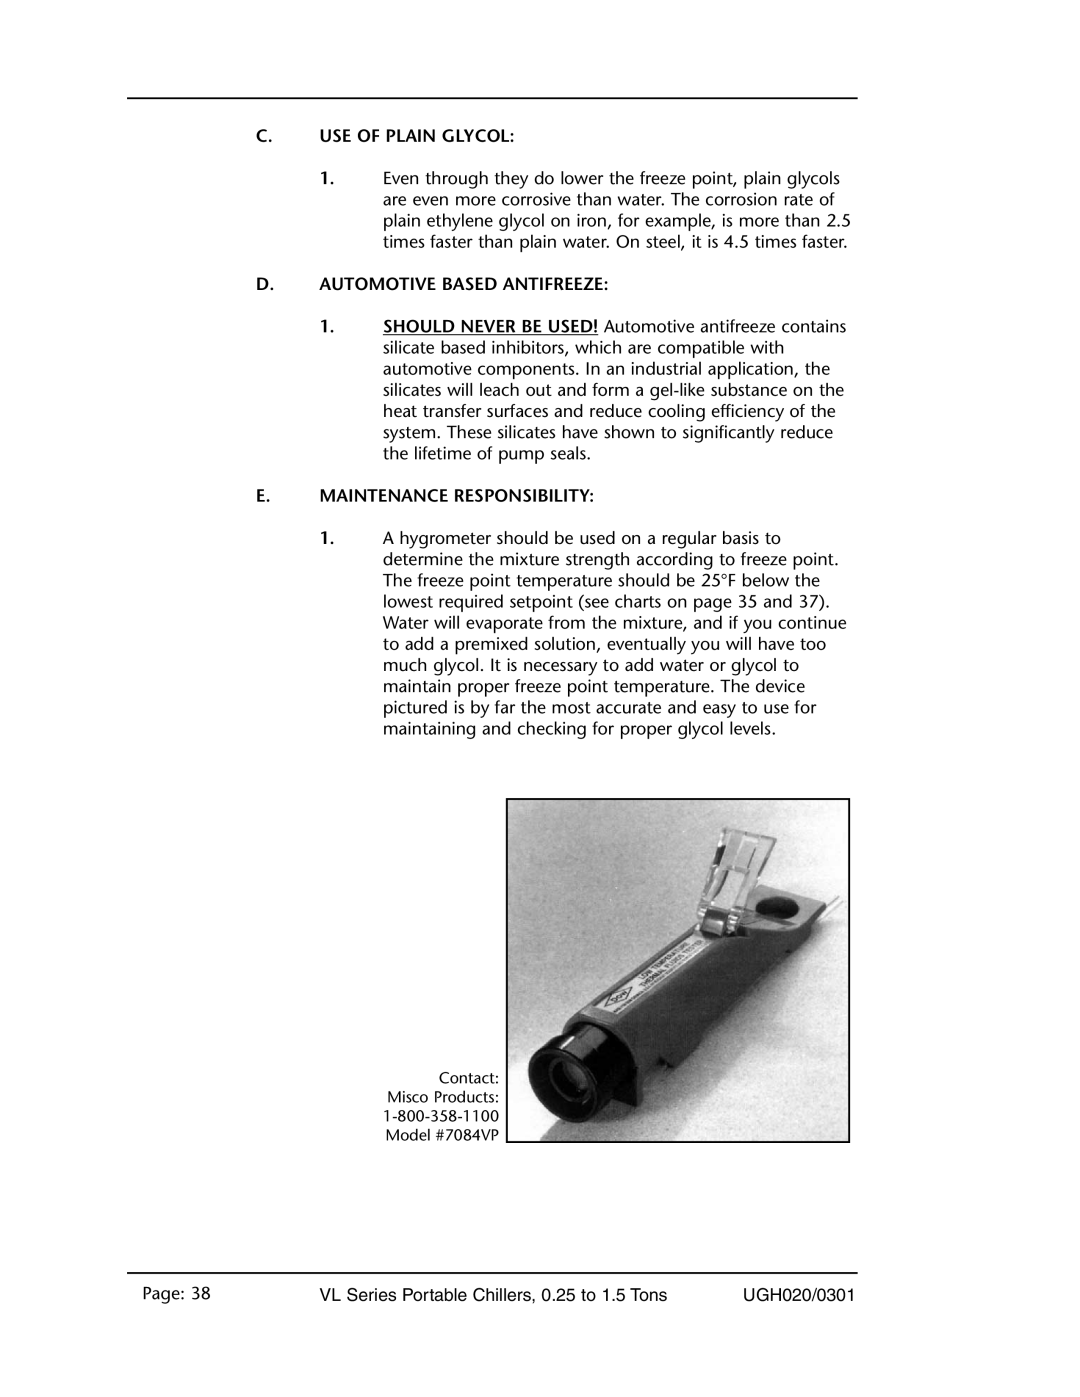 Conair VL Series, 0.25 to 1.5 ton manual C.Use Of Plain Glycol, D.Automotive Based Antifreeze, E.Maintenance Responsibility 